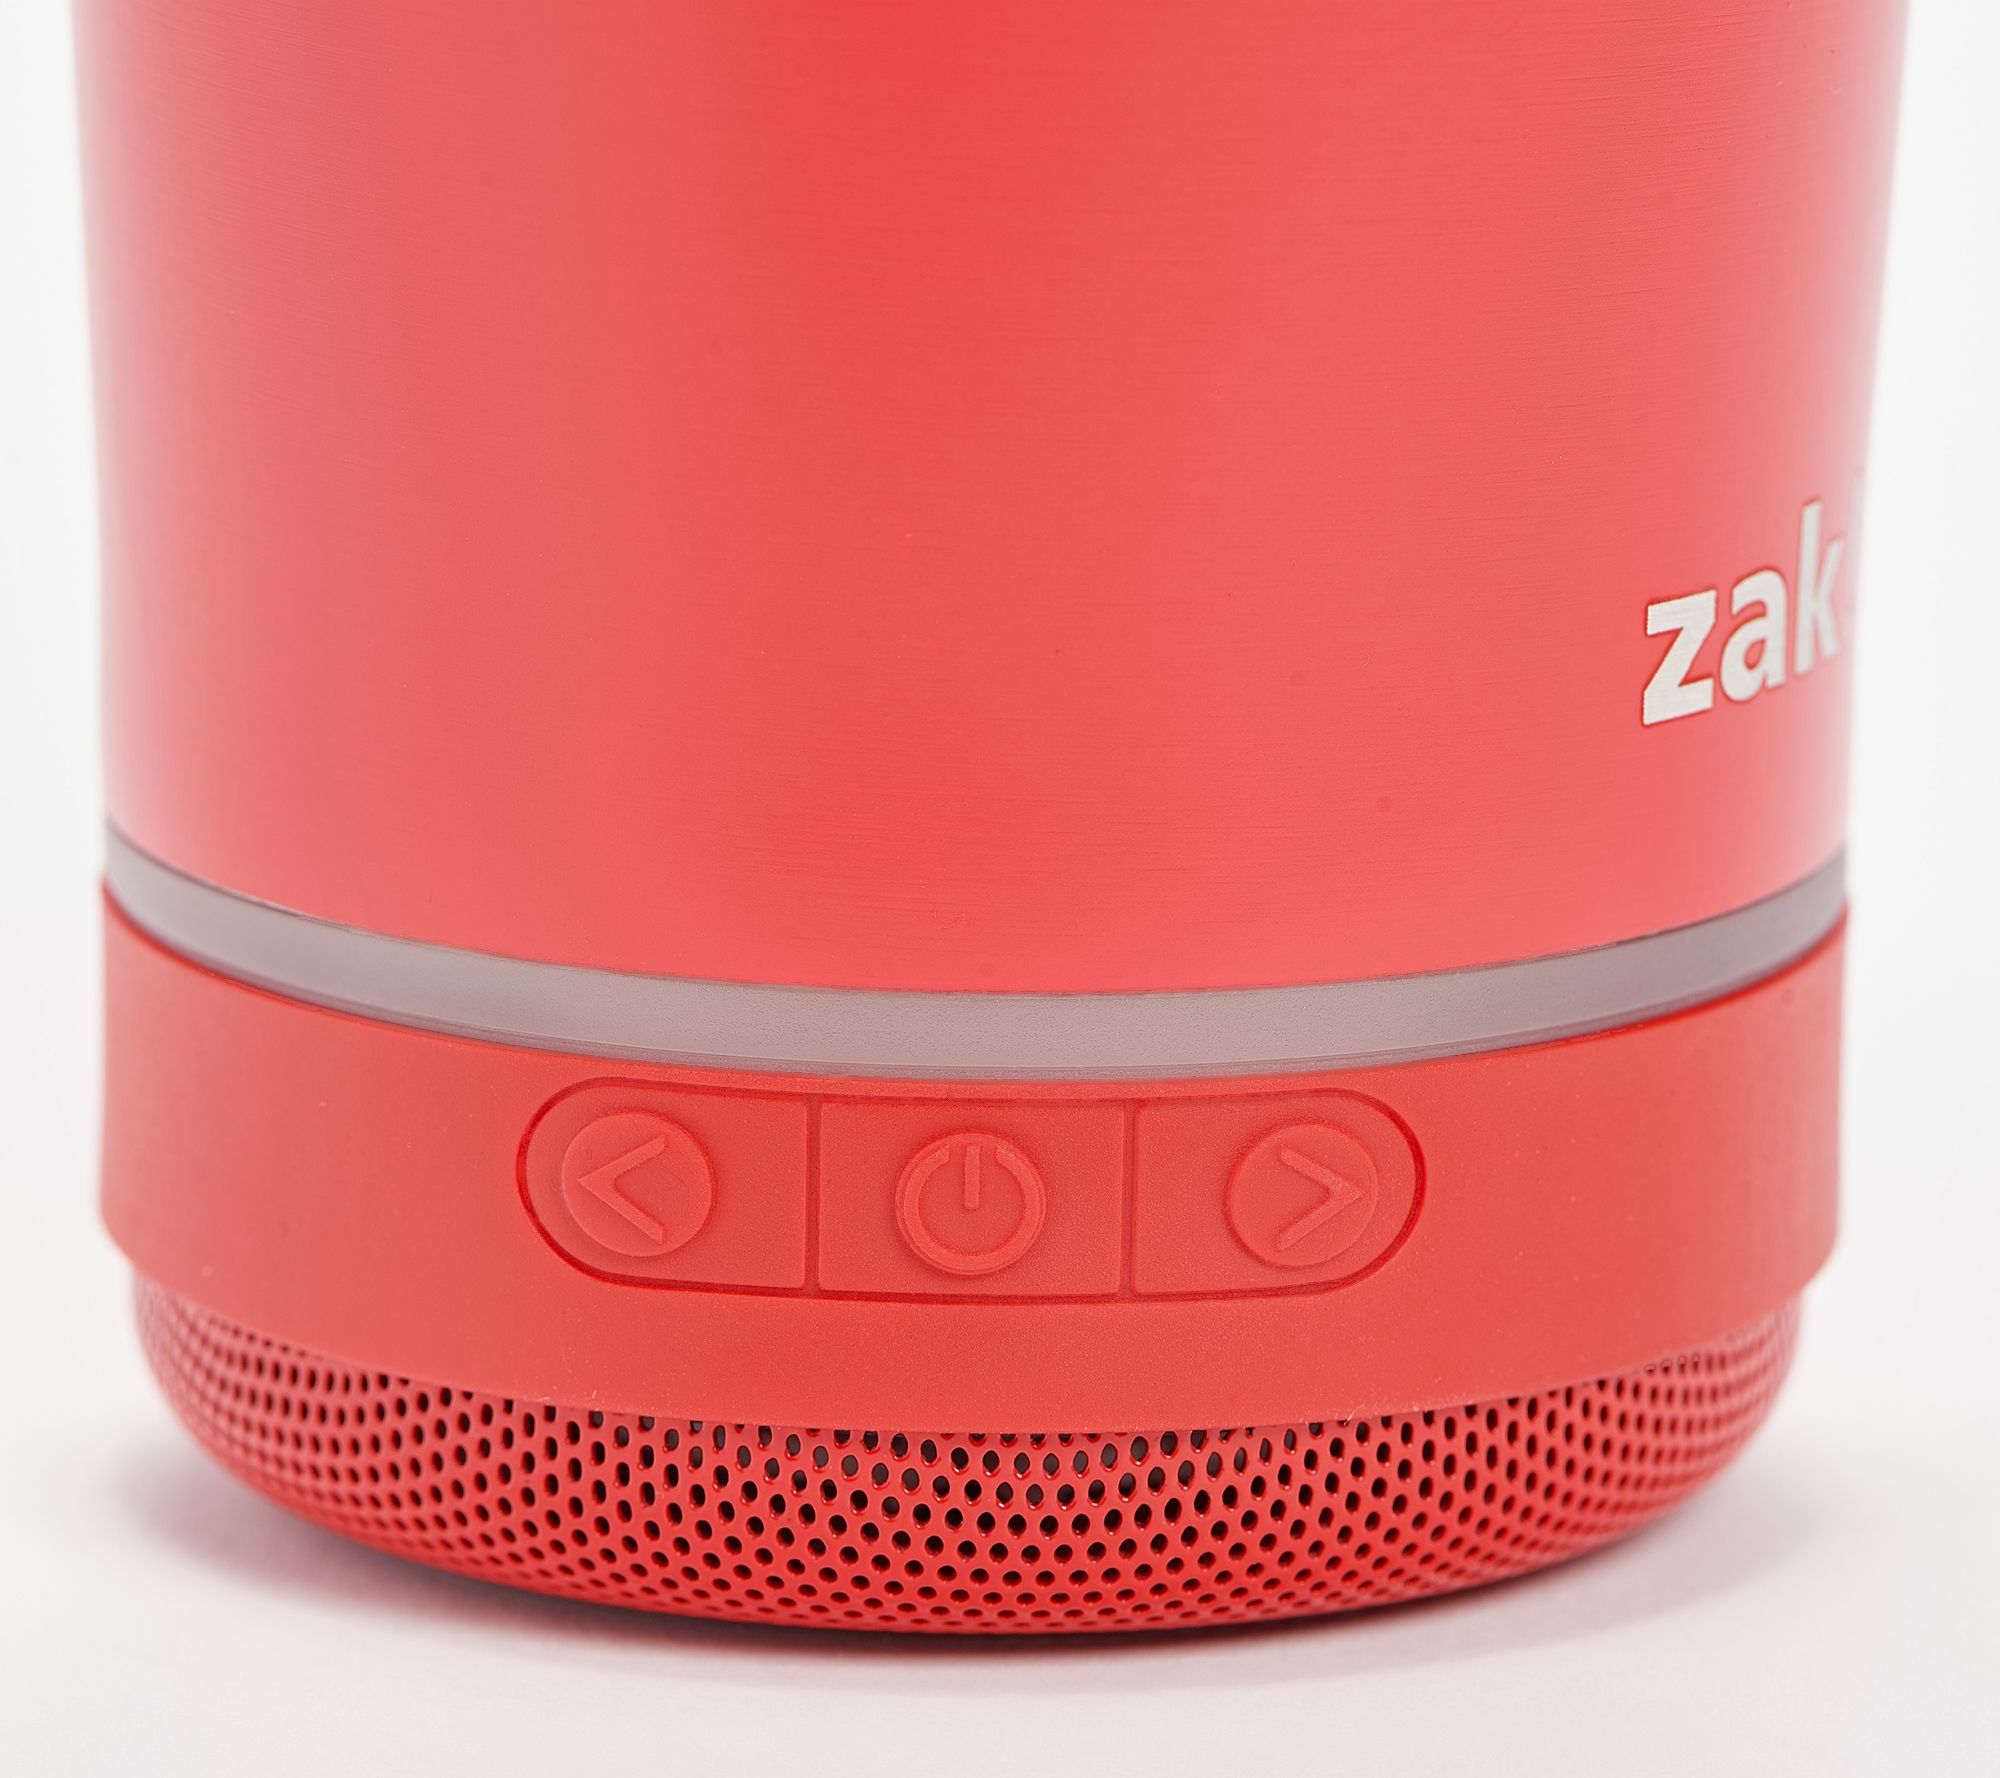 Zak! Designs Stainless Steel Tumbler With Wireless Speaker 